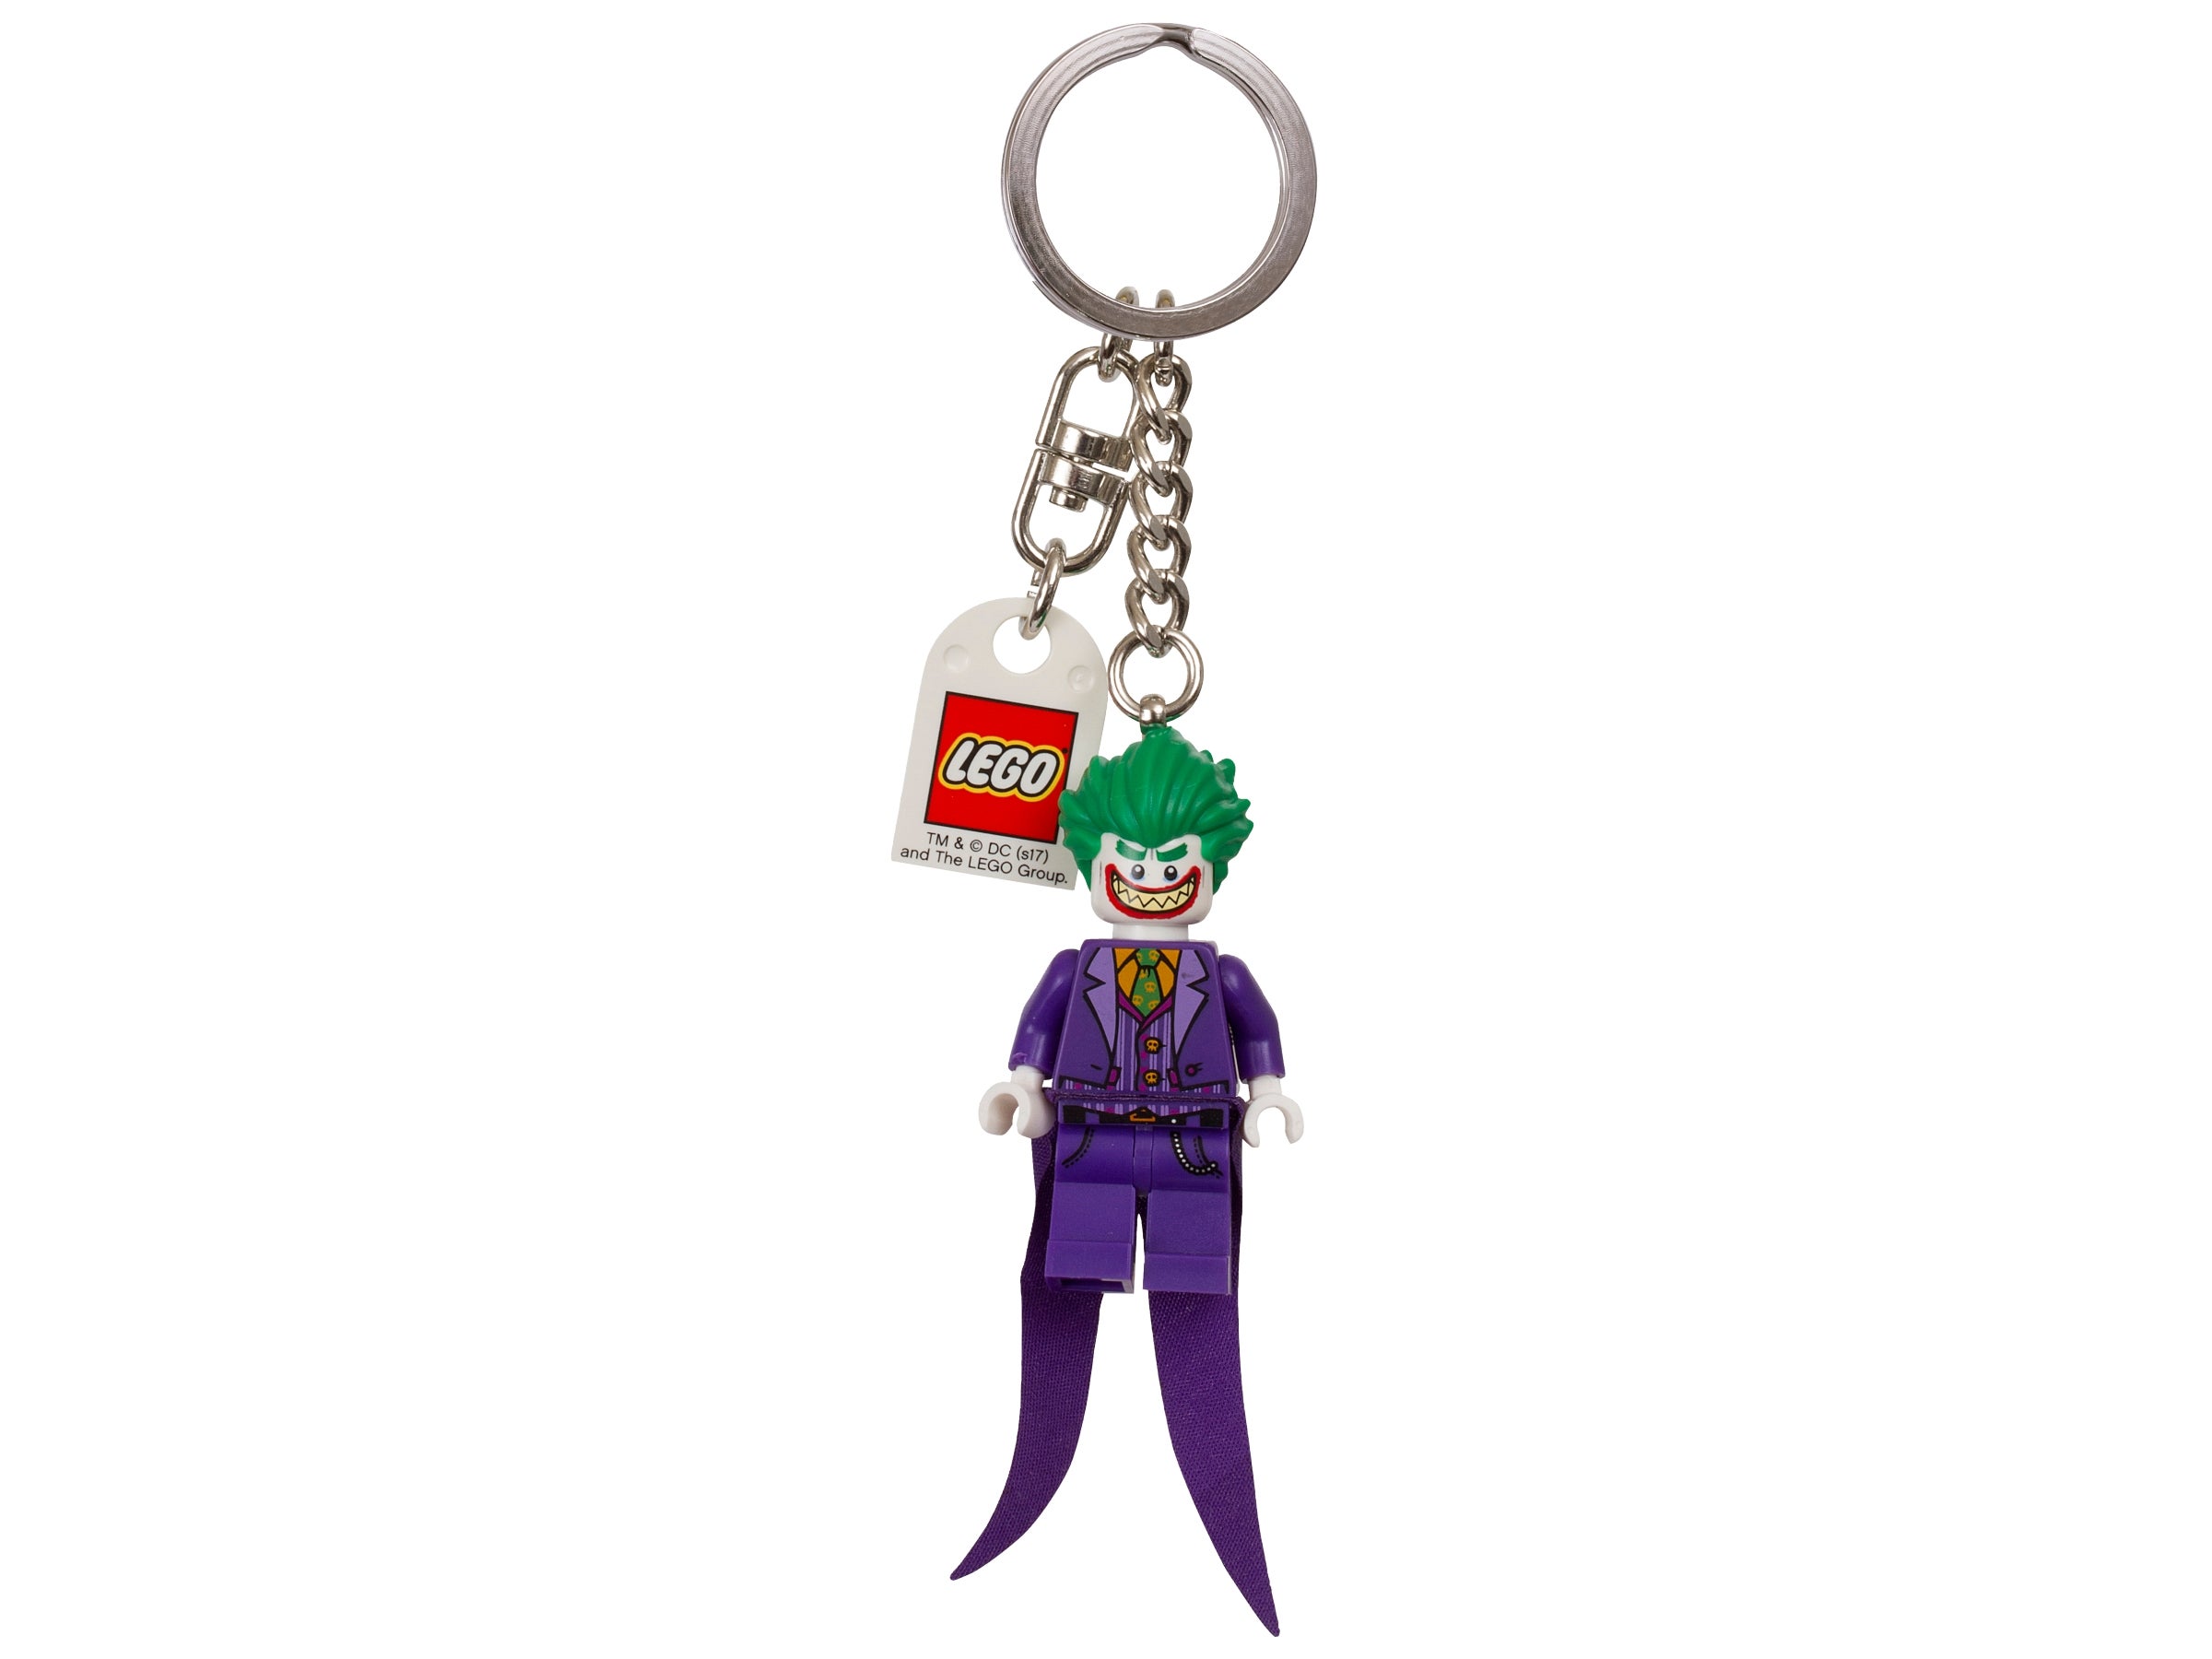 The Joker 851003 New Lego DC Comics Super Heroes Keyring